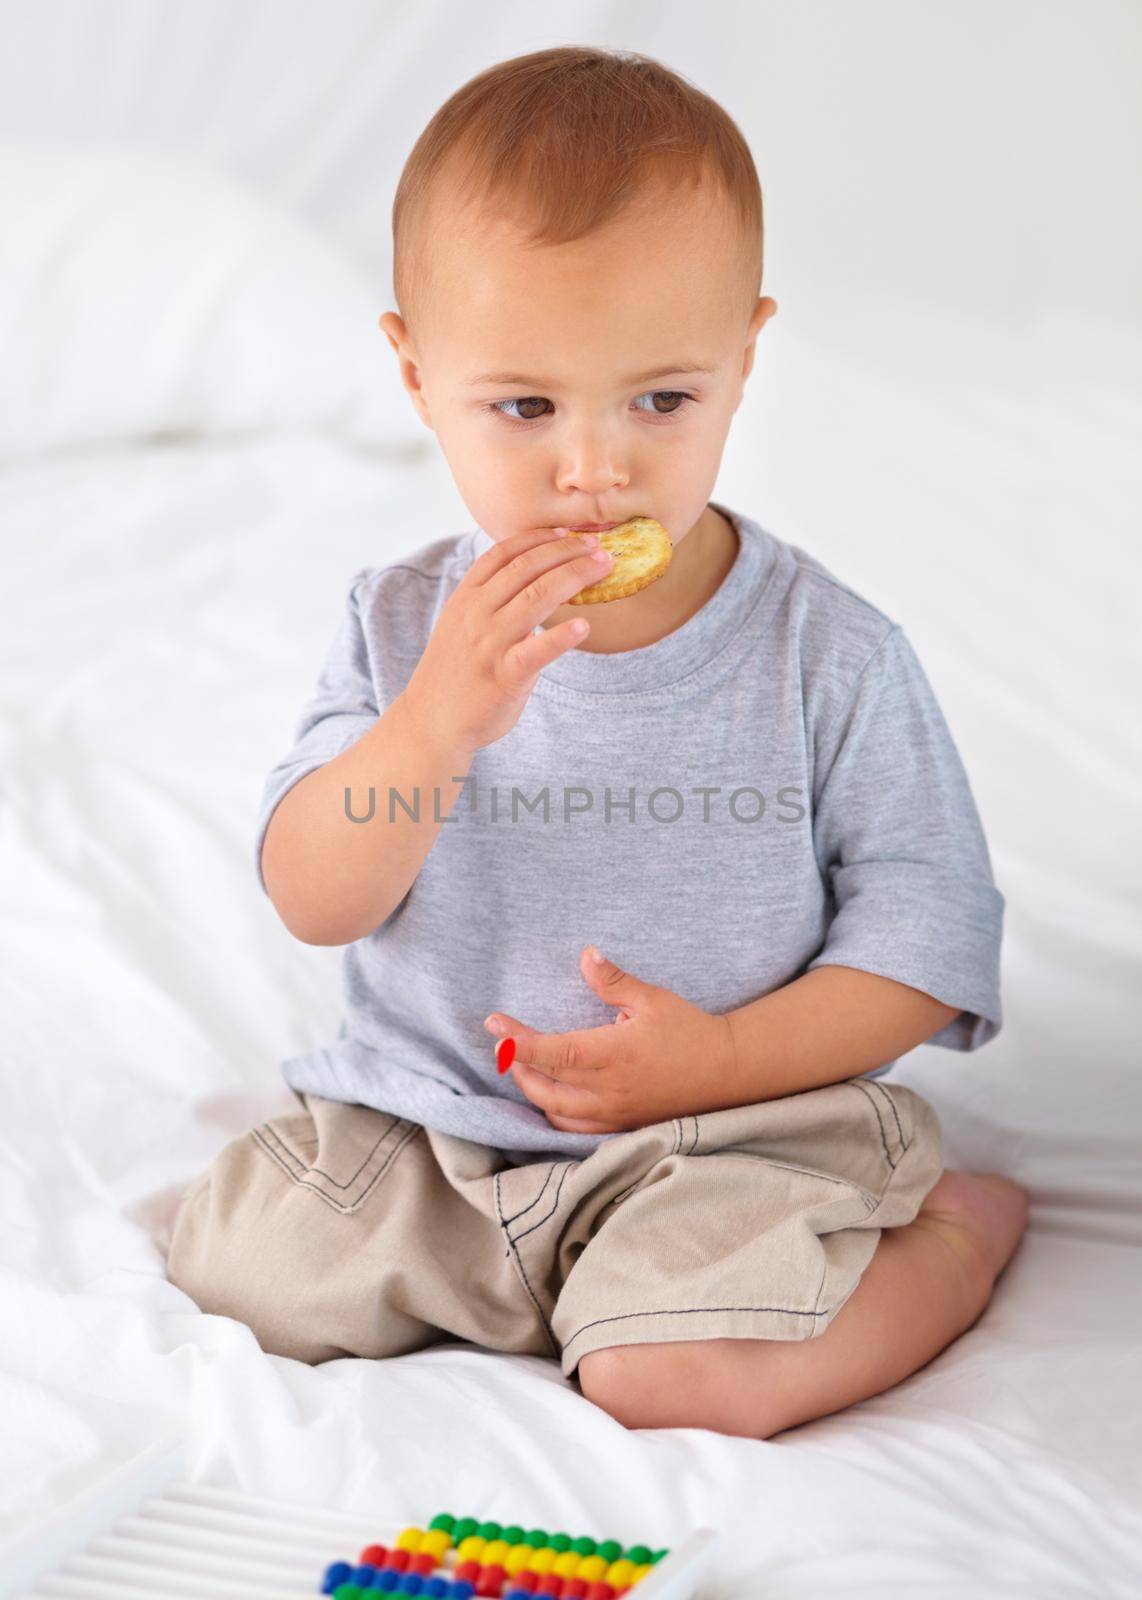 Eating a tasty cracker. A cute little boy eating a tasty cracker. by YuriArcurs